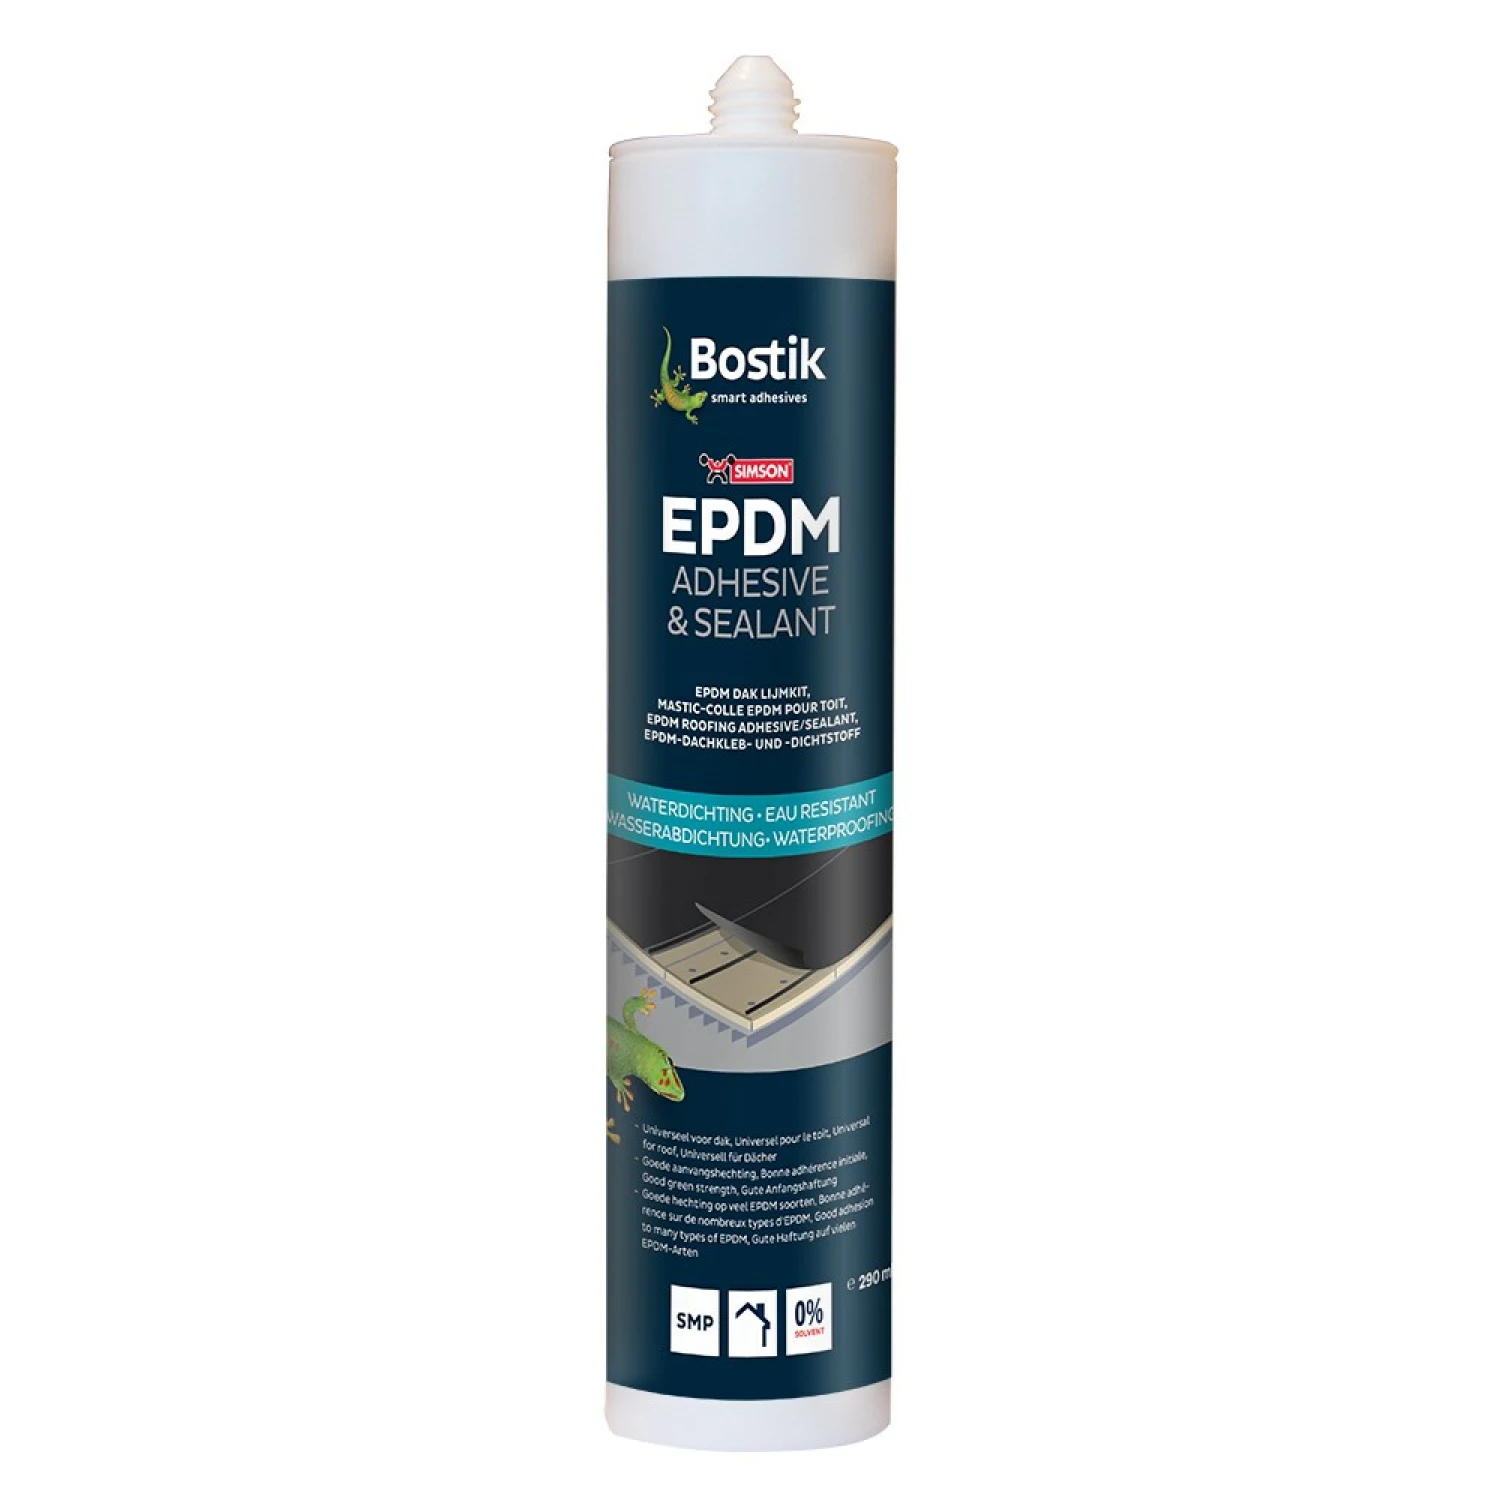 Bostik 30608958 EPDM Adhesive & Sealant - EPDM kit - 290 ml-image